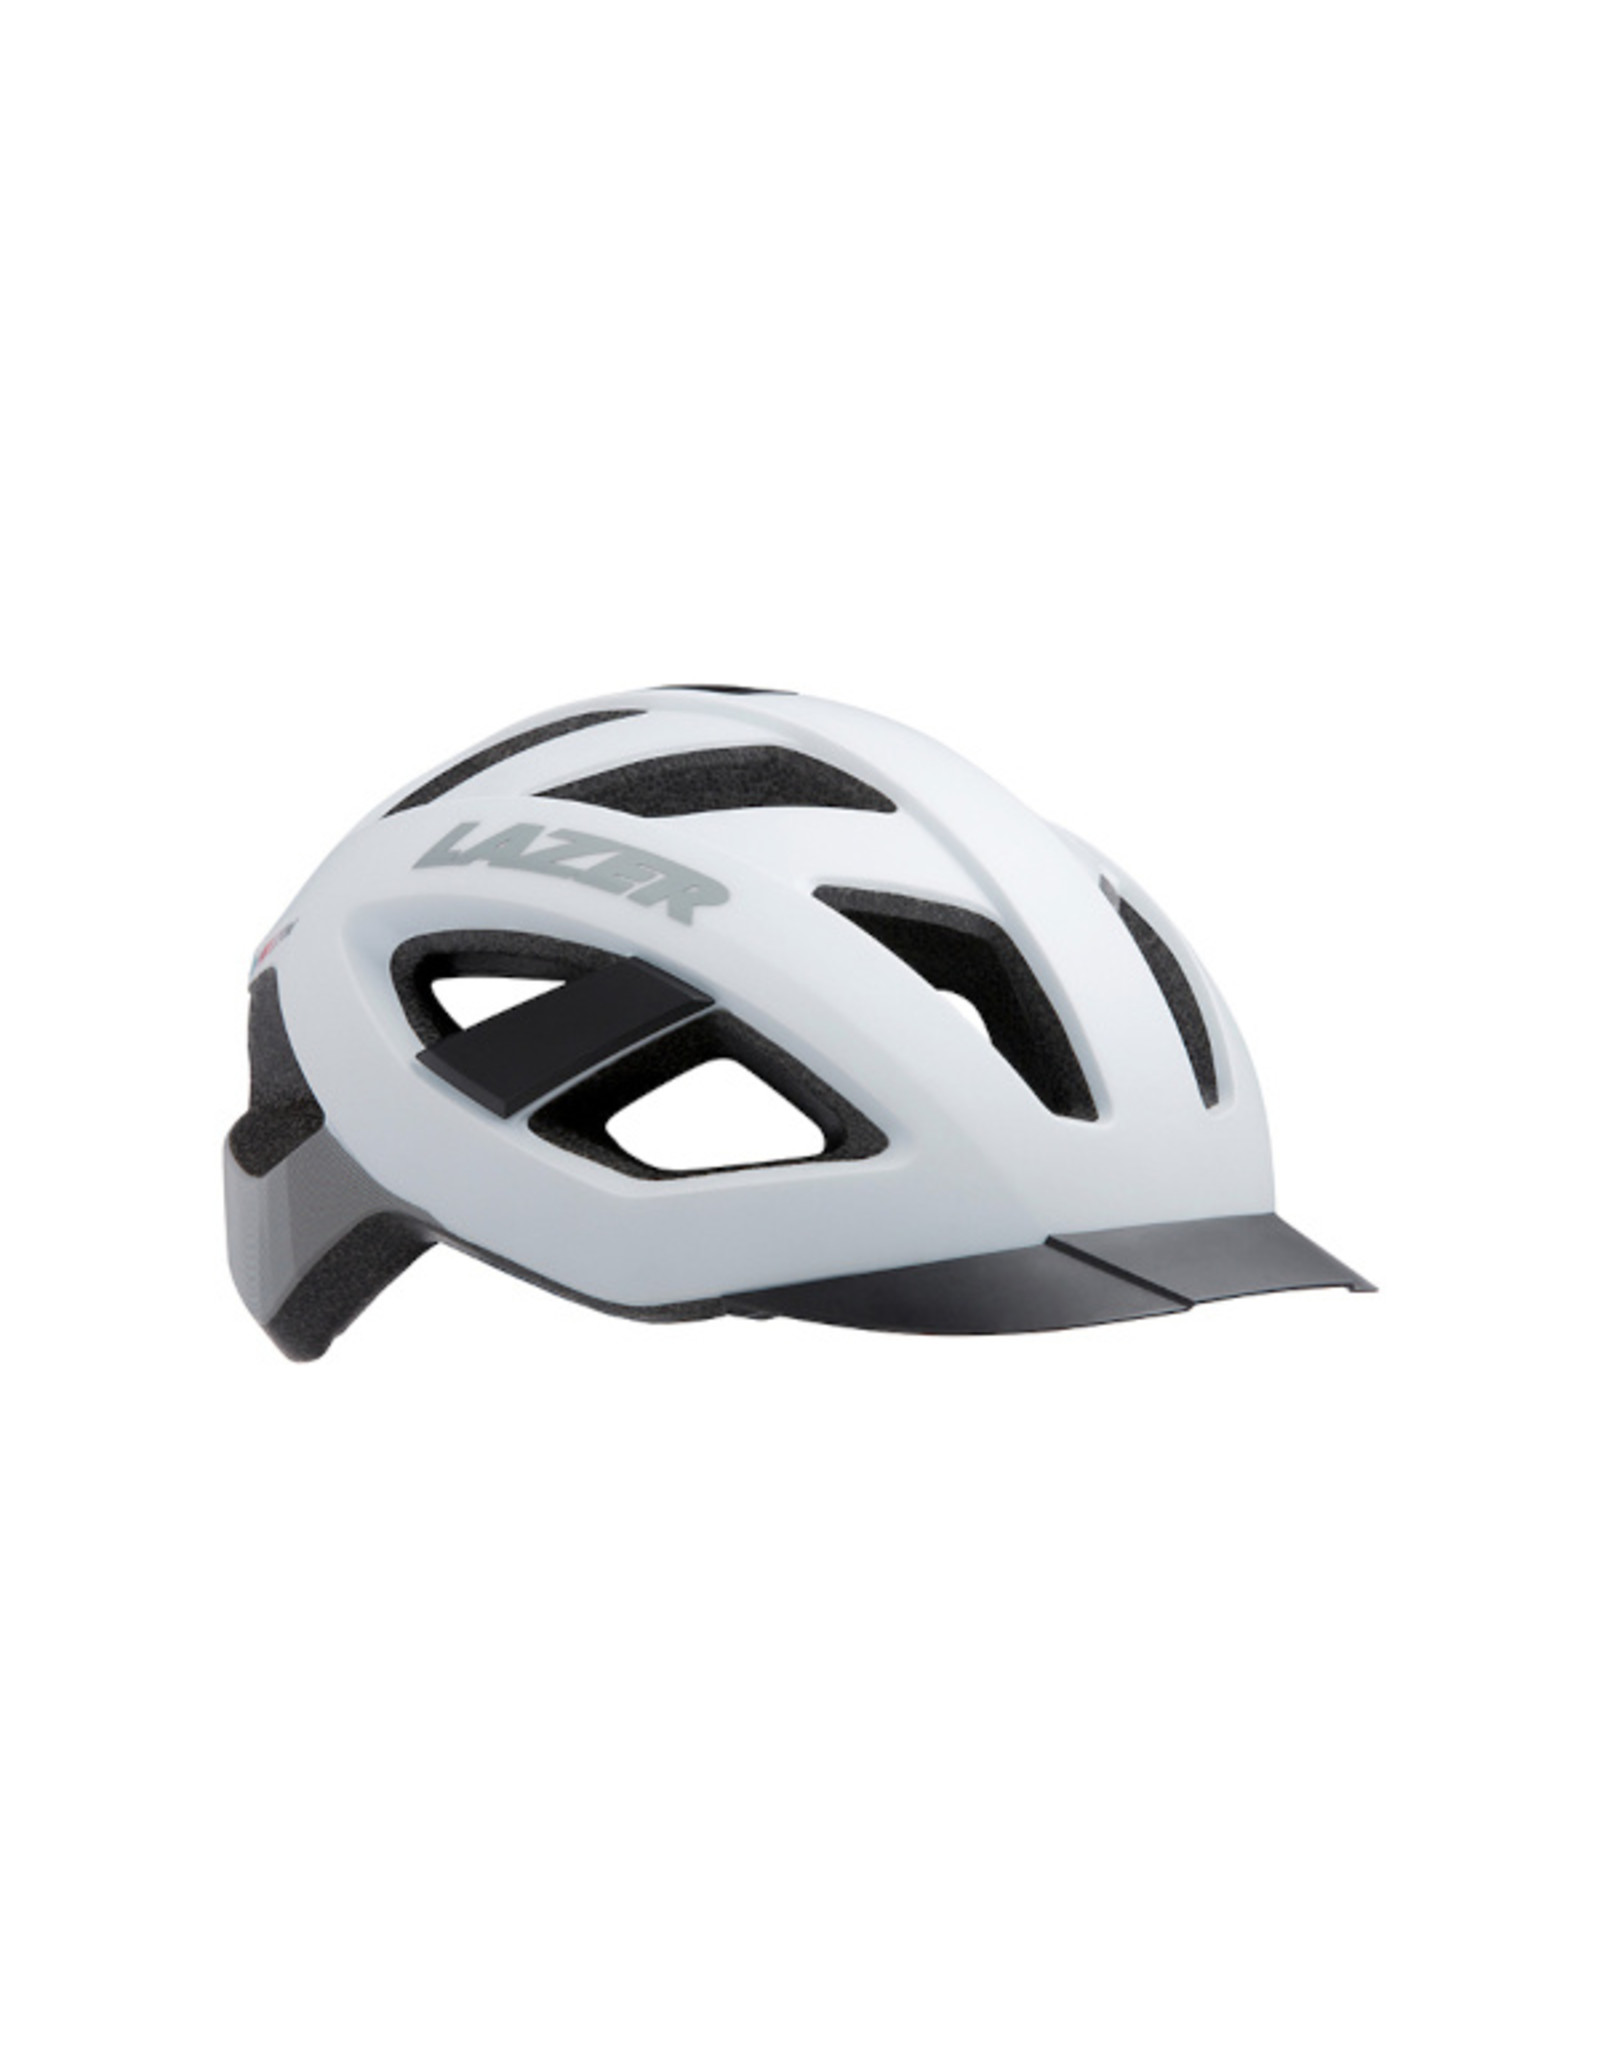 Helmet White Small (52-56 cm) Lazer - MSU Bike Service Center